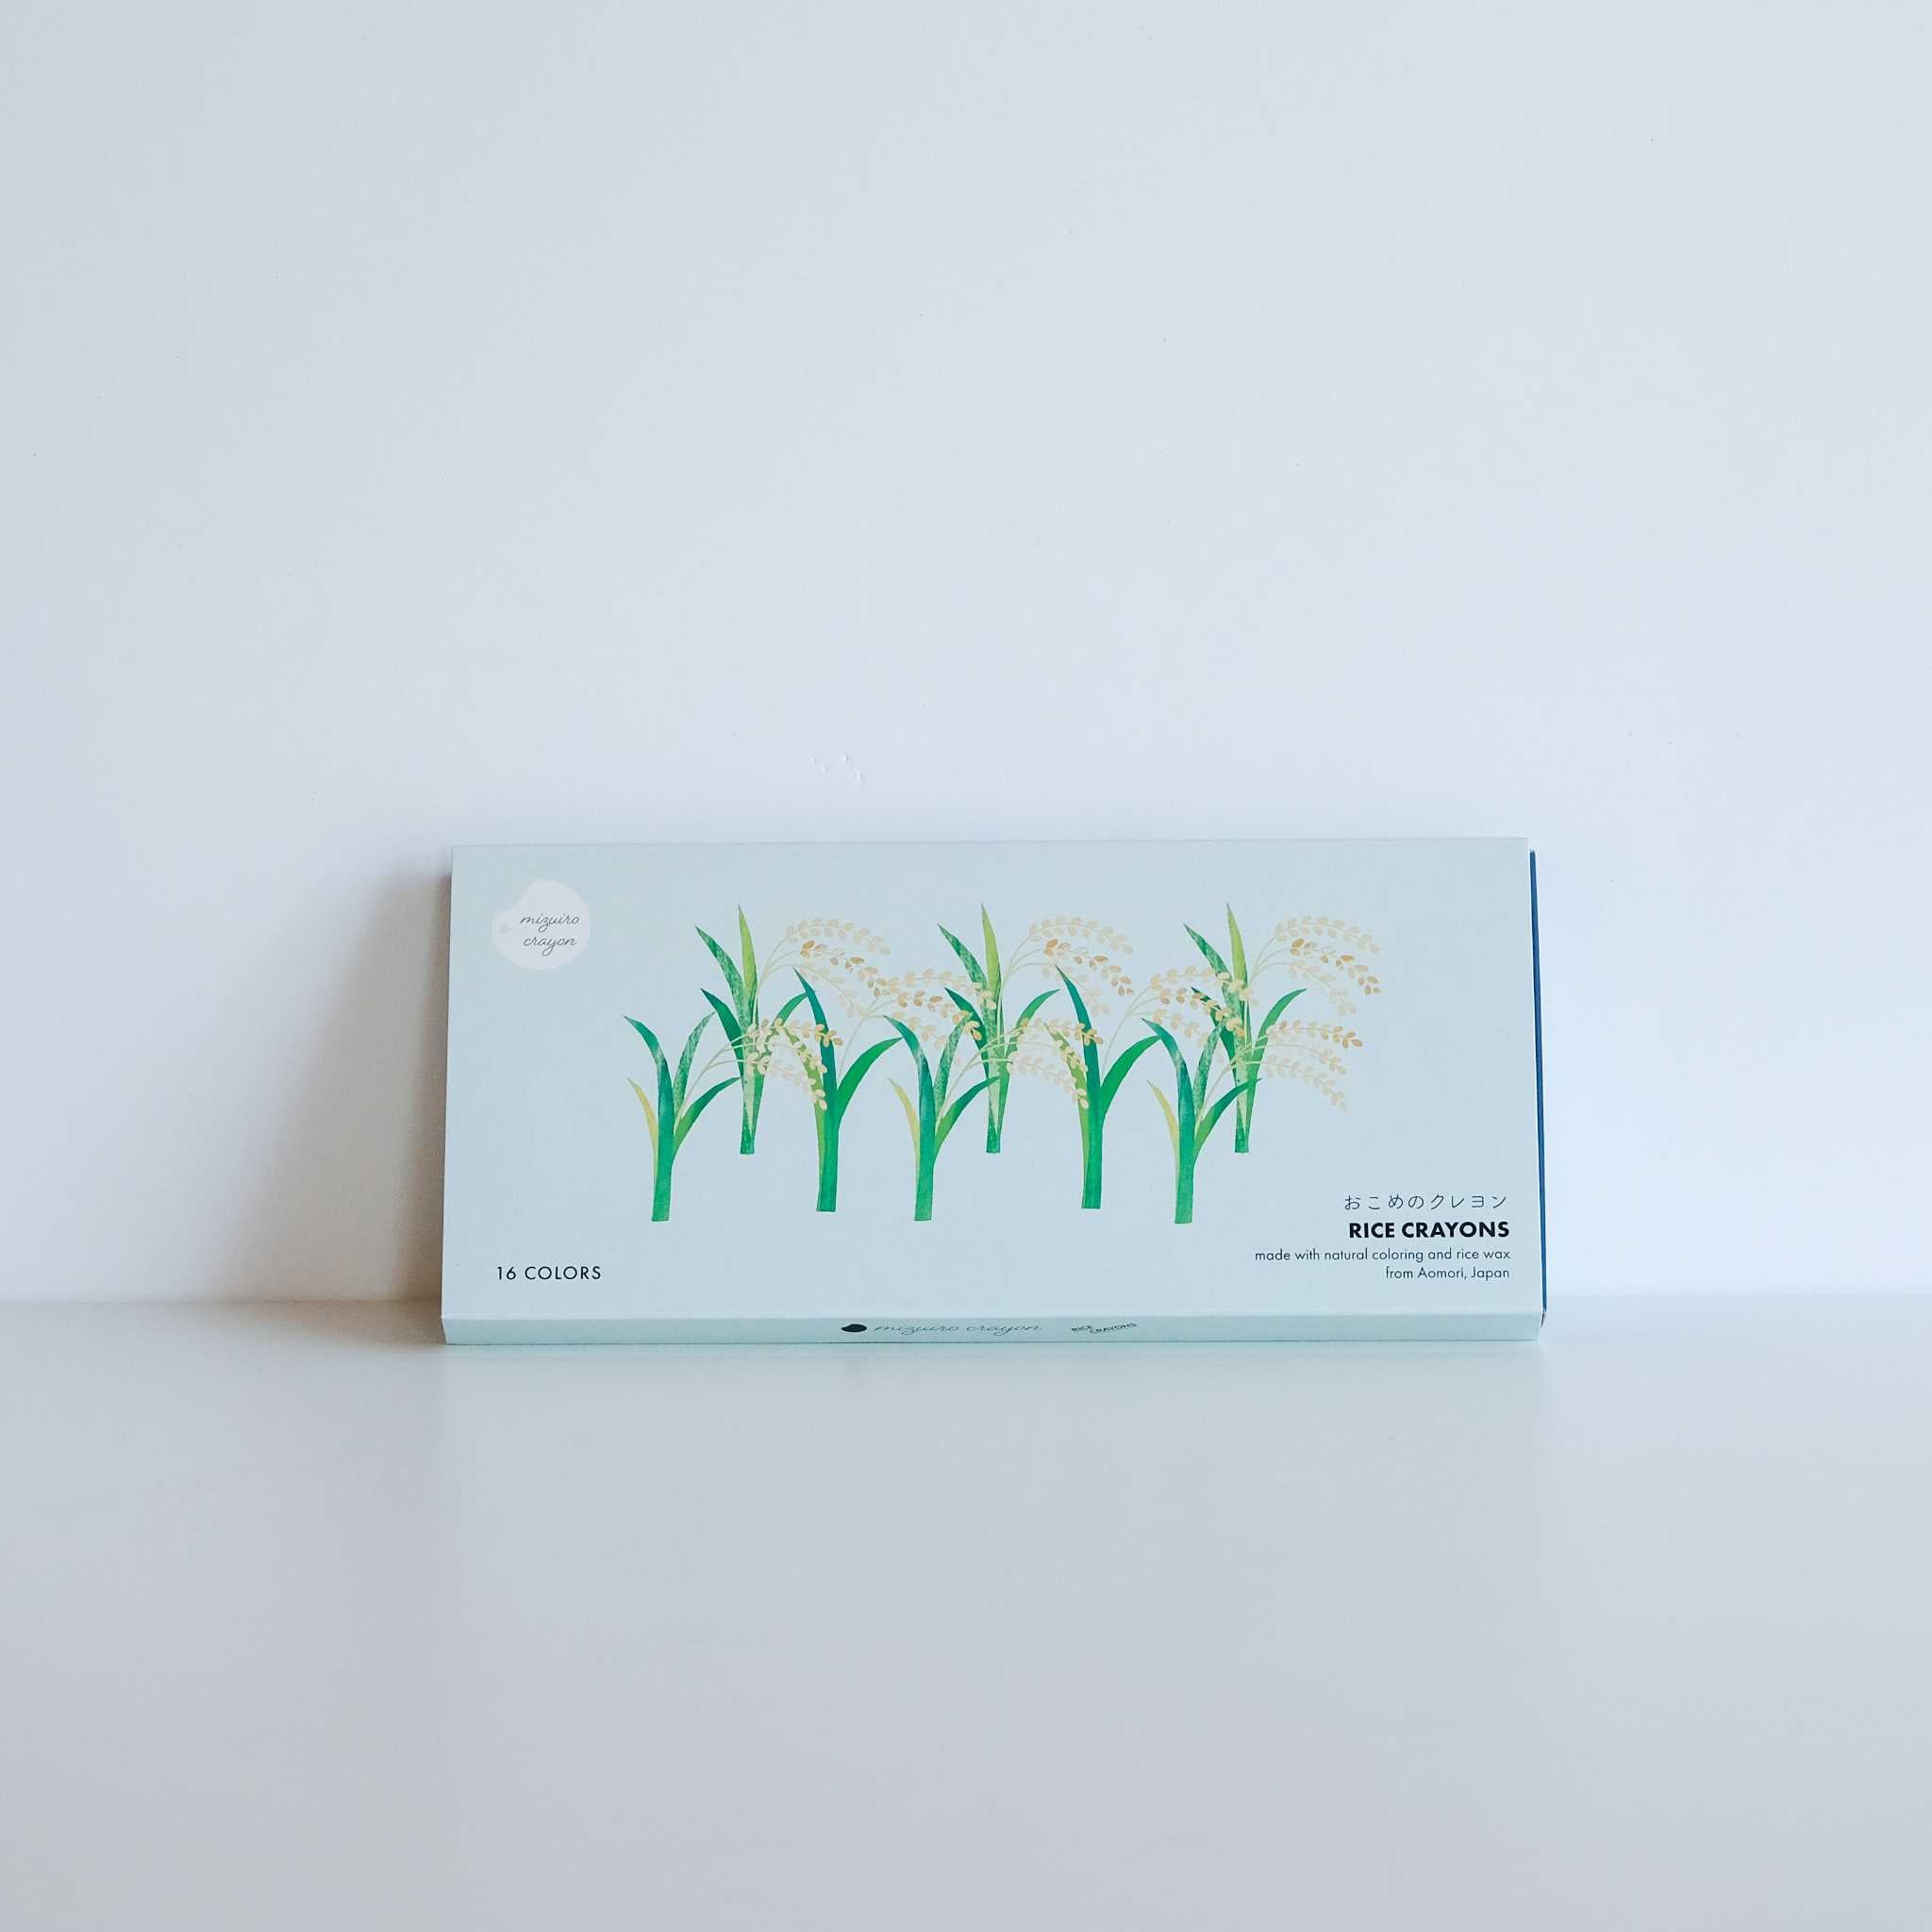 Mizuiro Rice Crayons 16 Pack Packaging